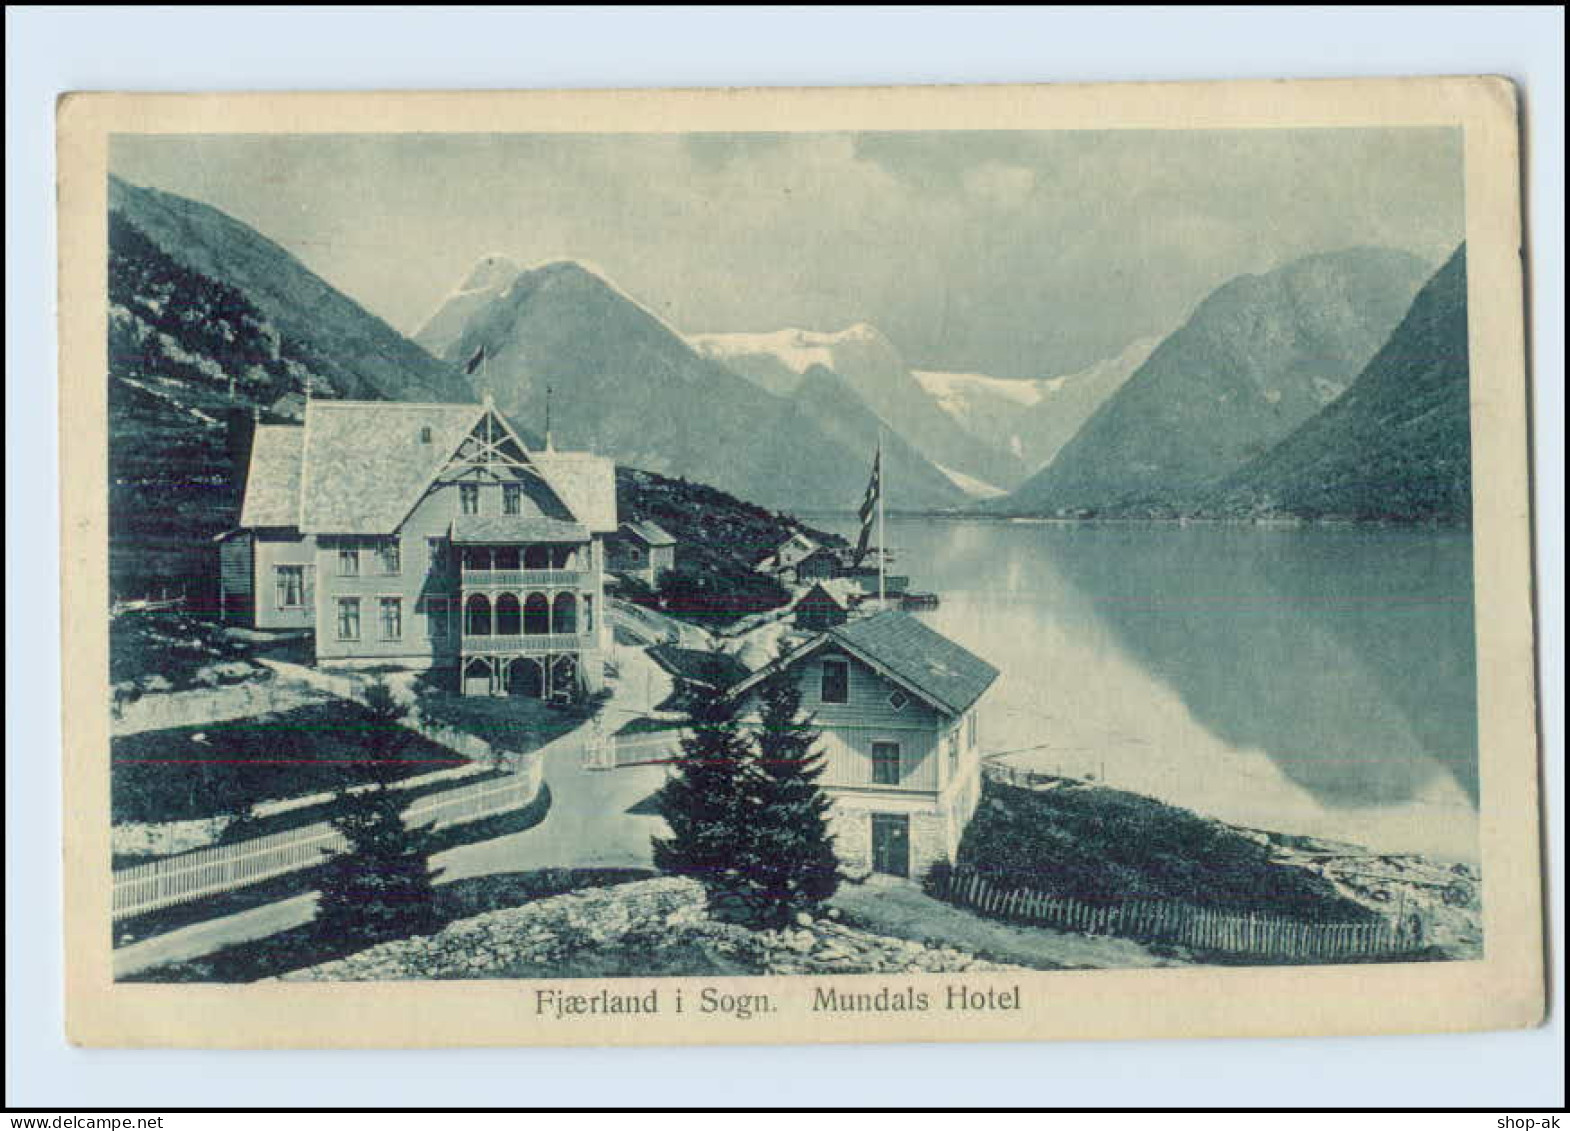 N011/ Fjaerland I Sogn In Norwegen, Mundals Hotel AK 1911 - Noorwegen